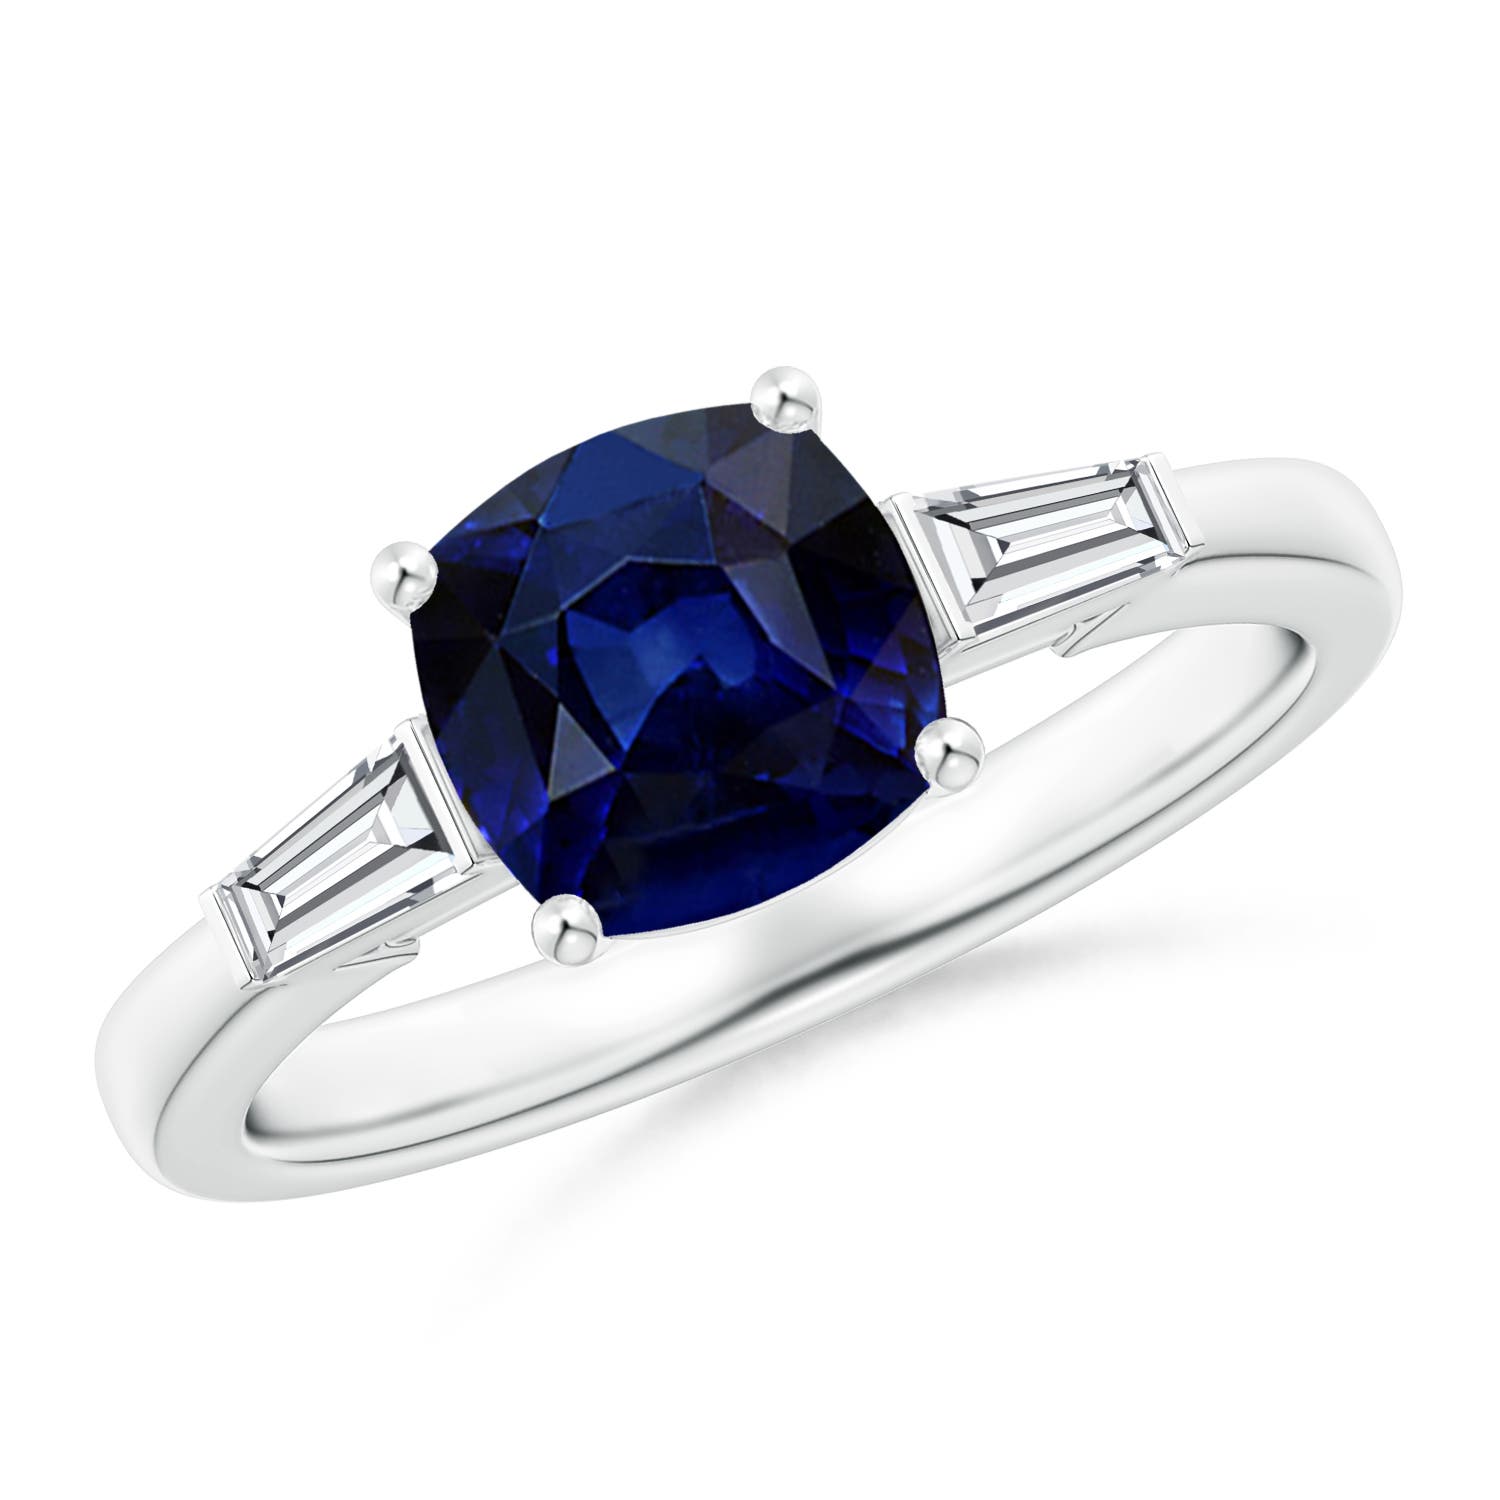 Cushion Sapphire Ring with Bar-Set Tapered Baguette Diamonds | Angara